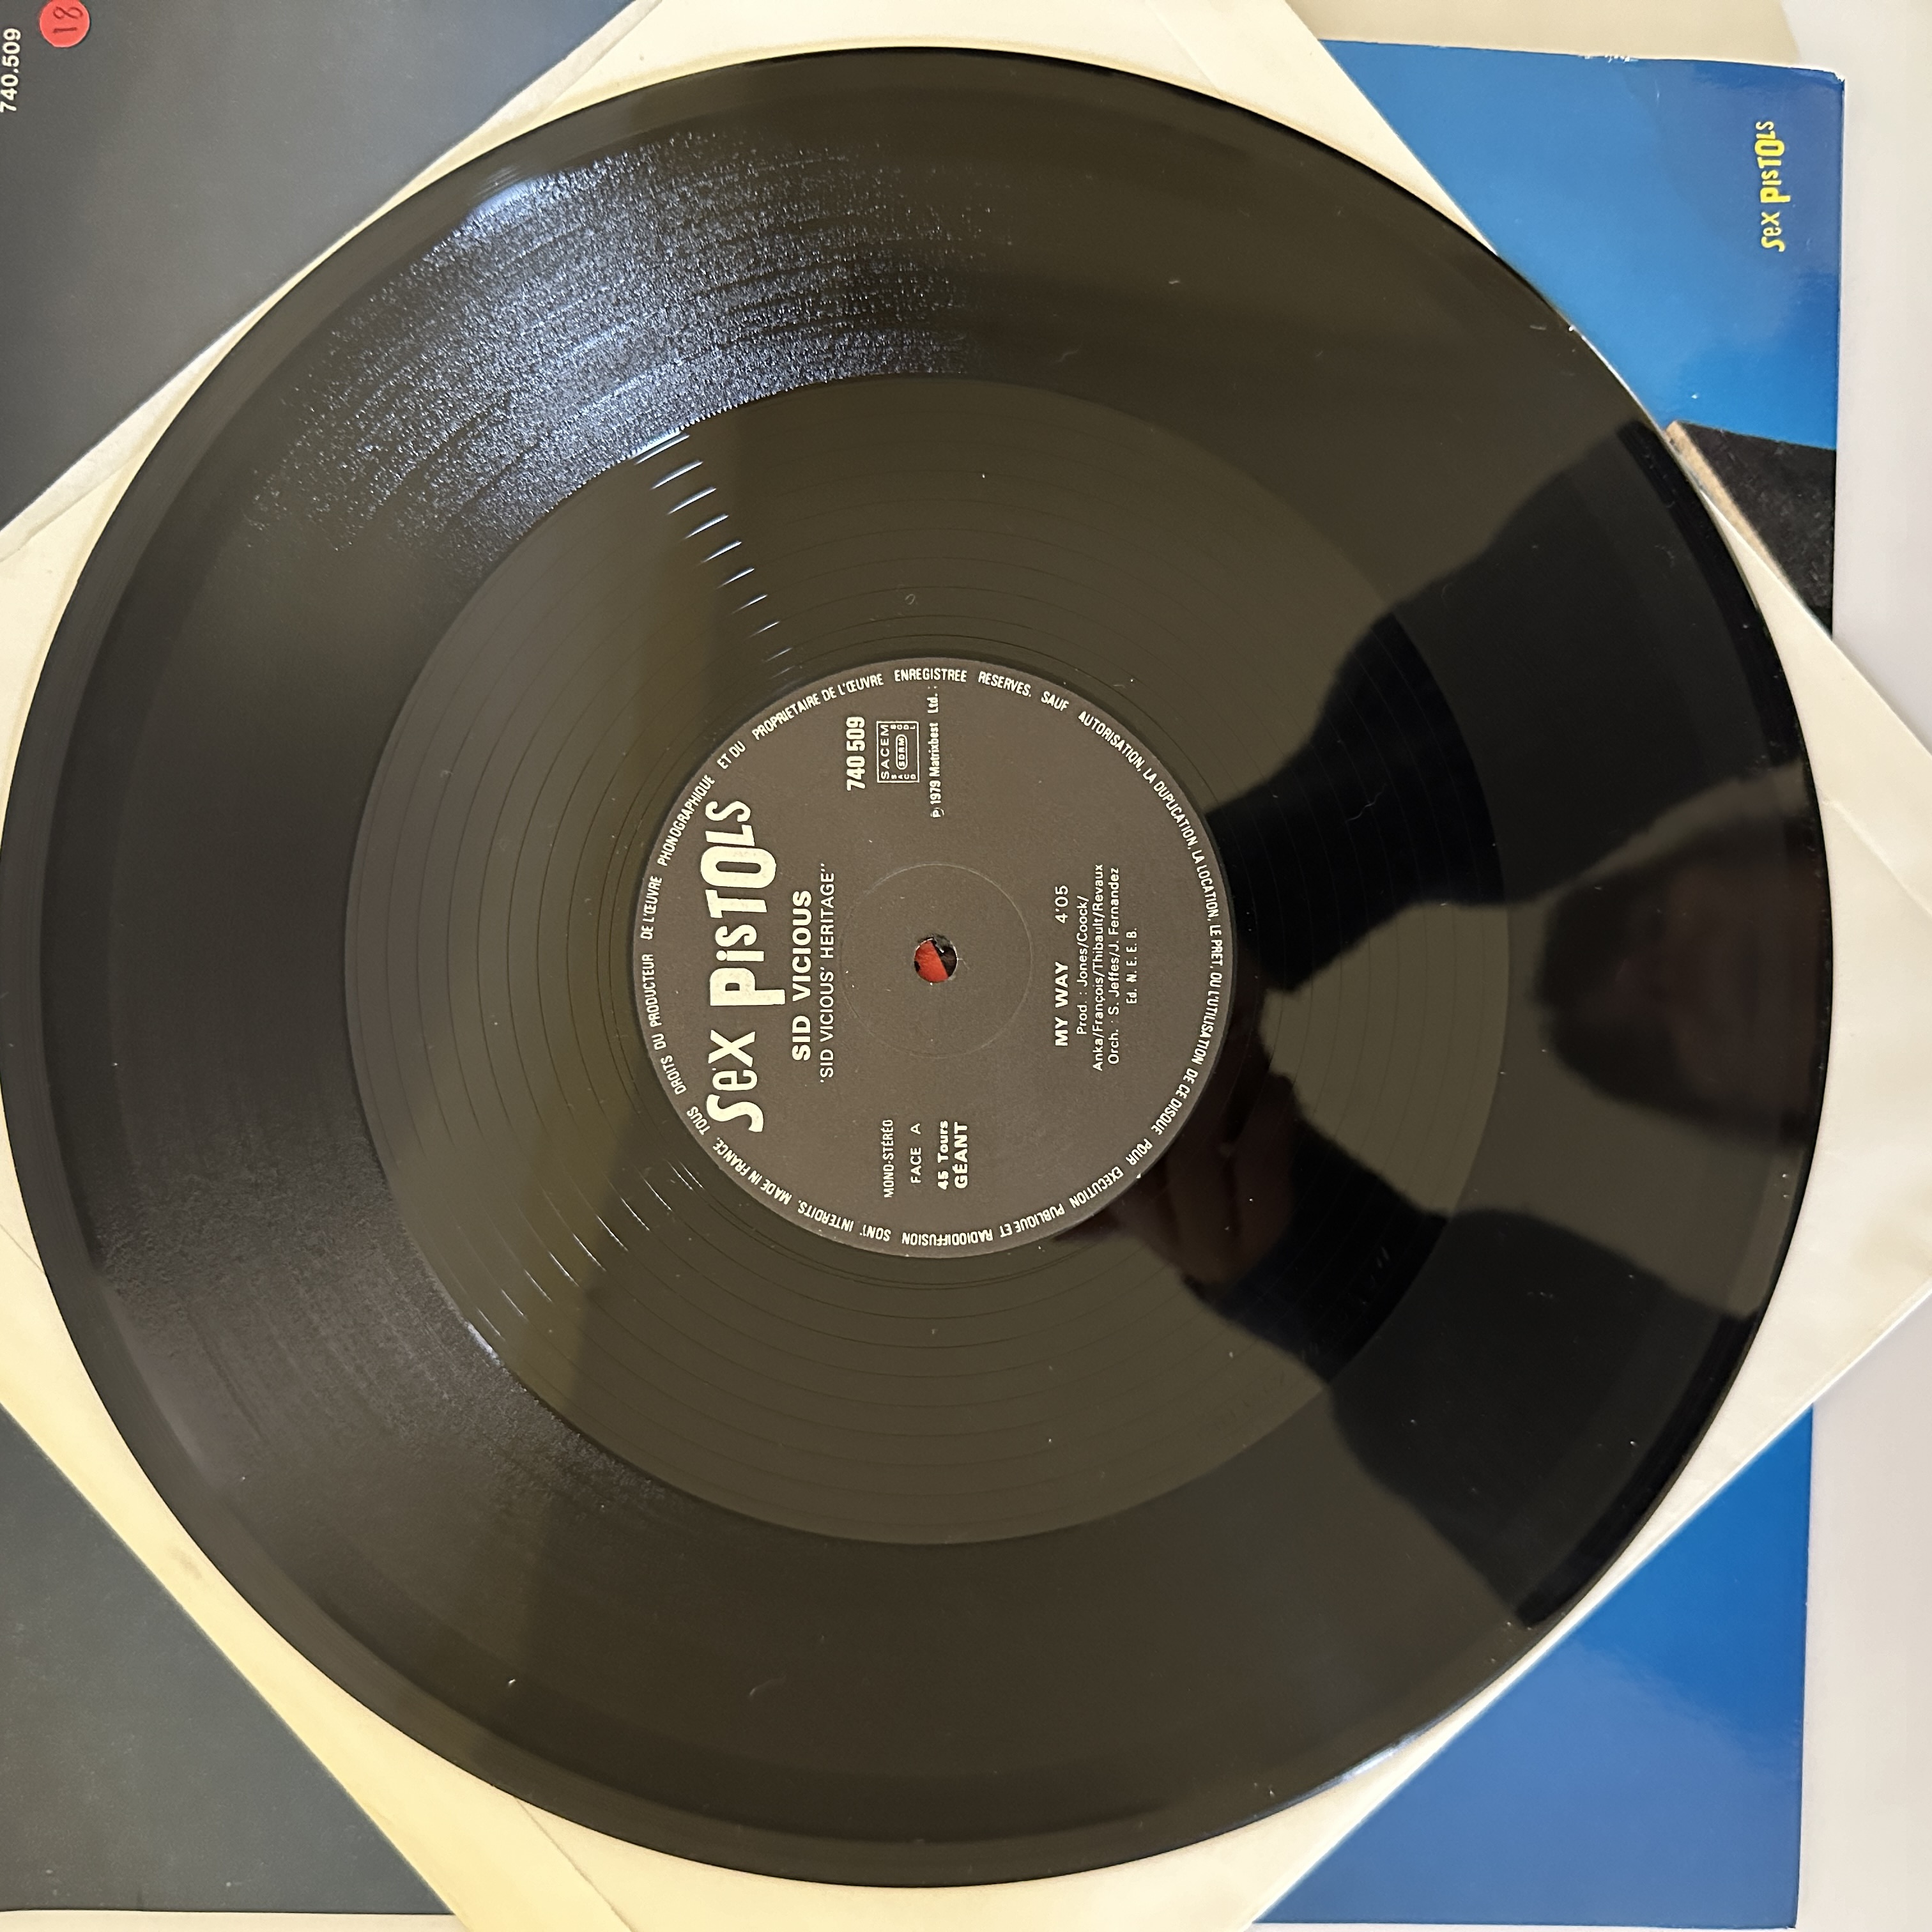 Sid Vicious - C'mon Everybody vinyl LP - Image 5 of 8